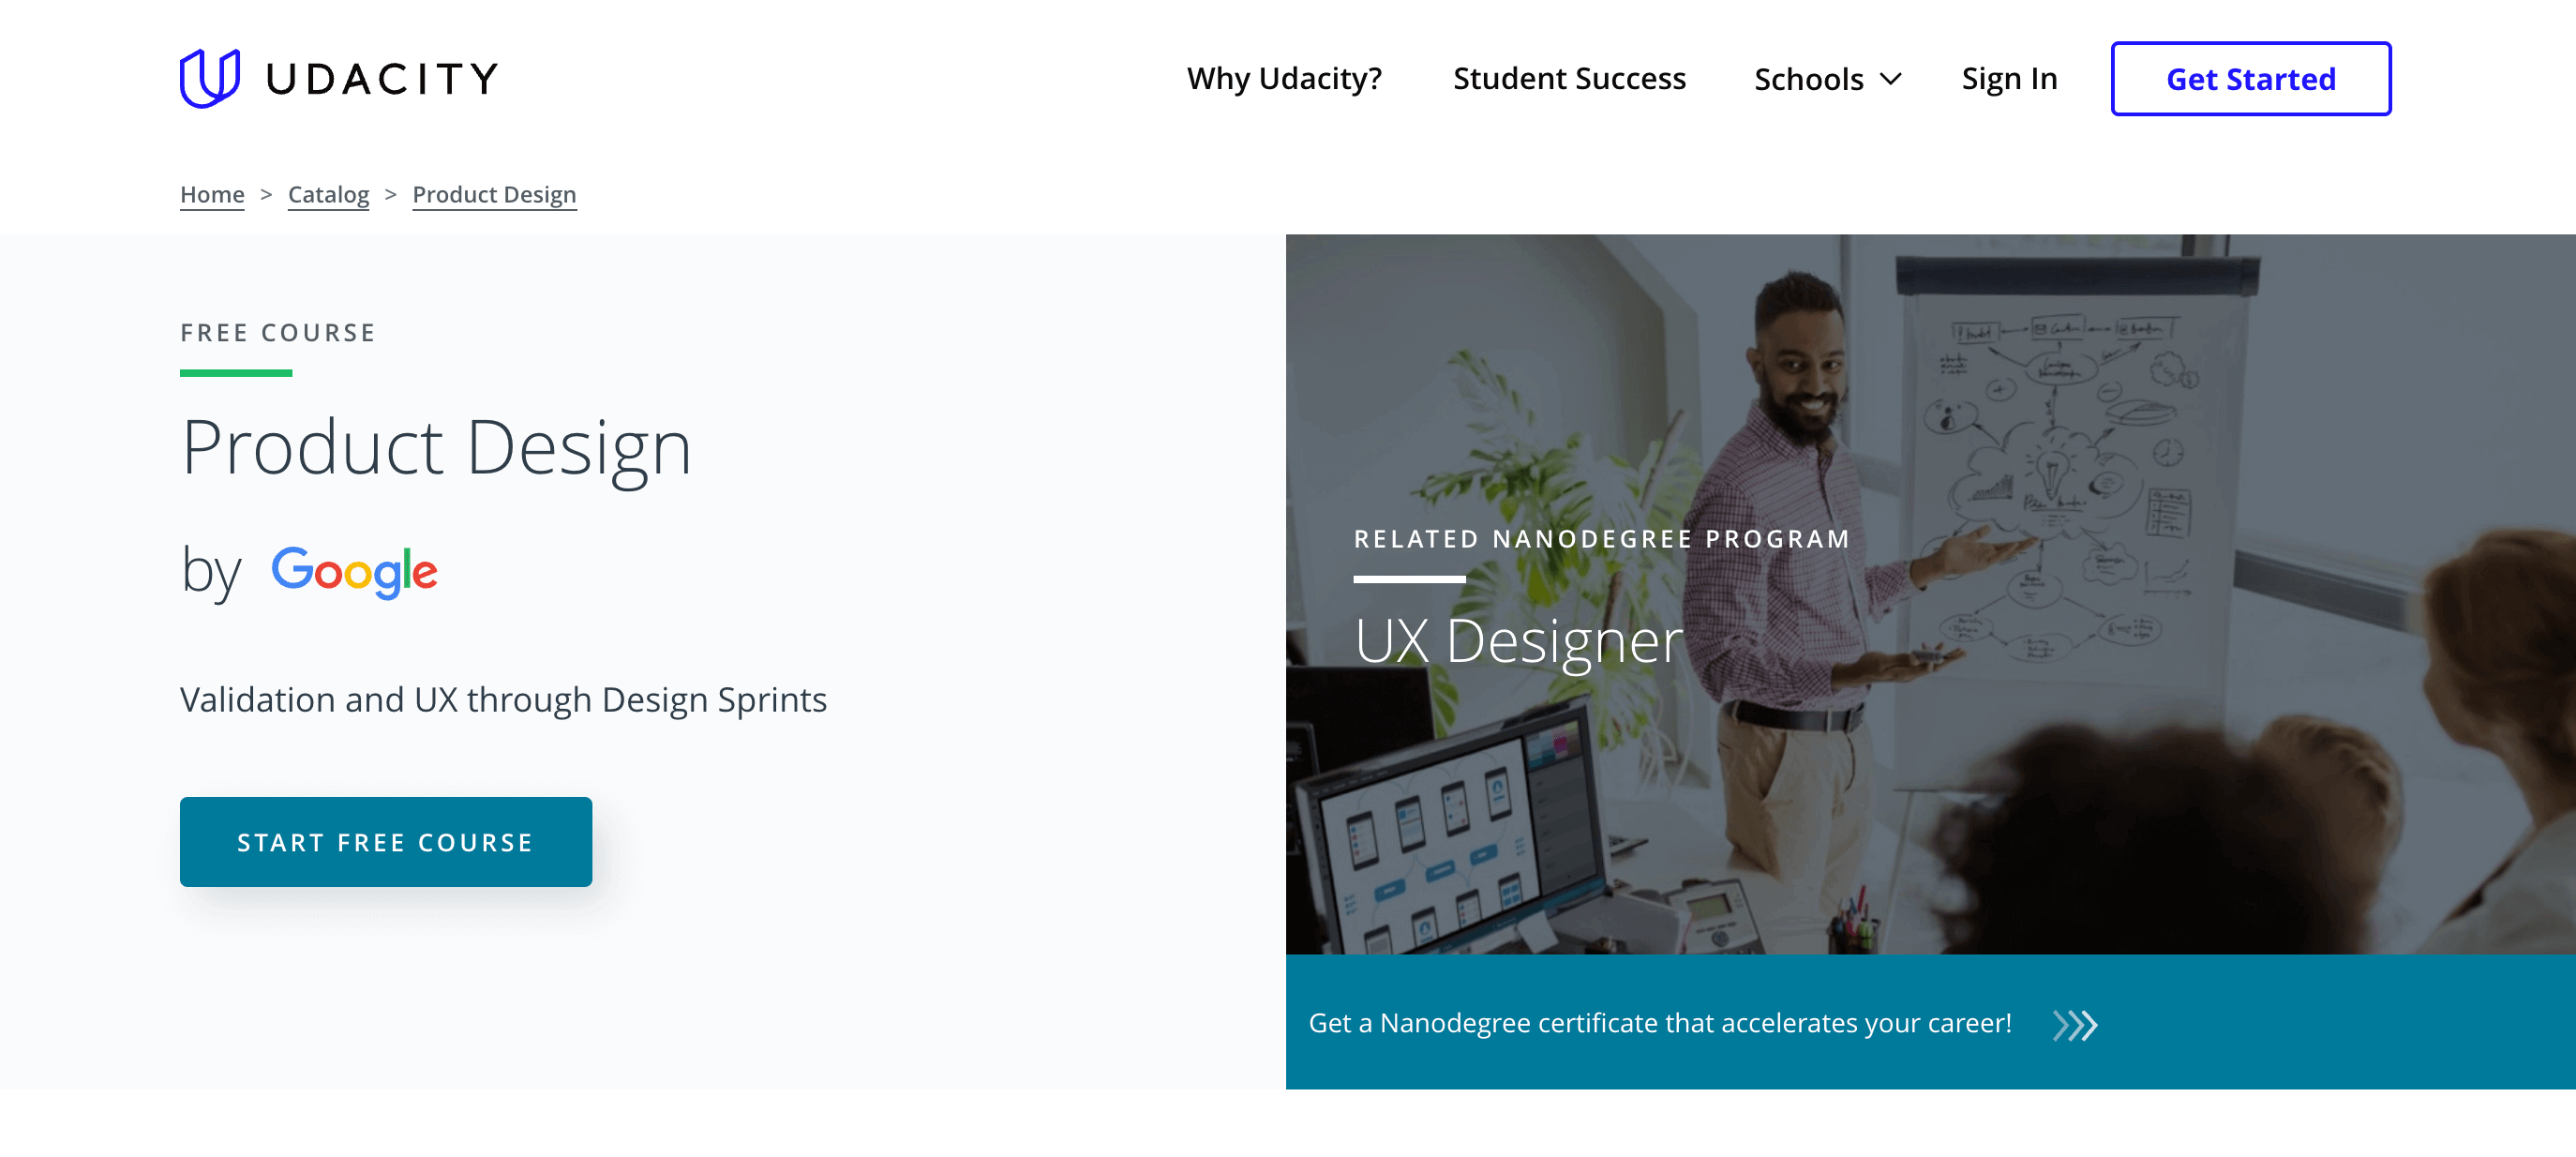 Google’s Product Design Course on Udacity